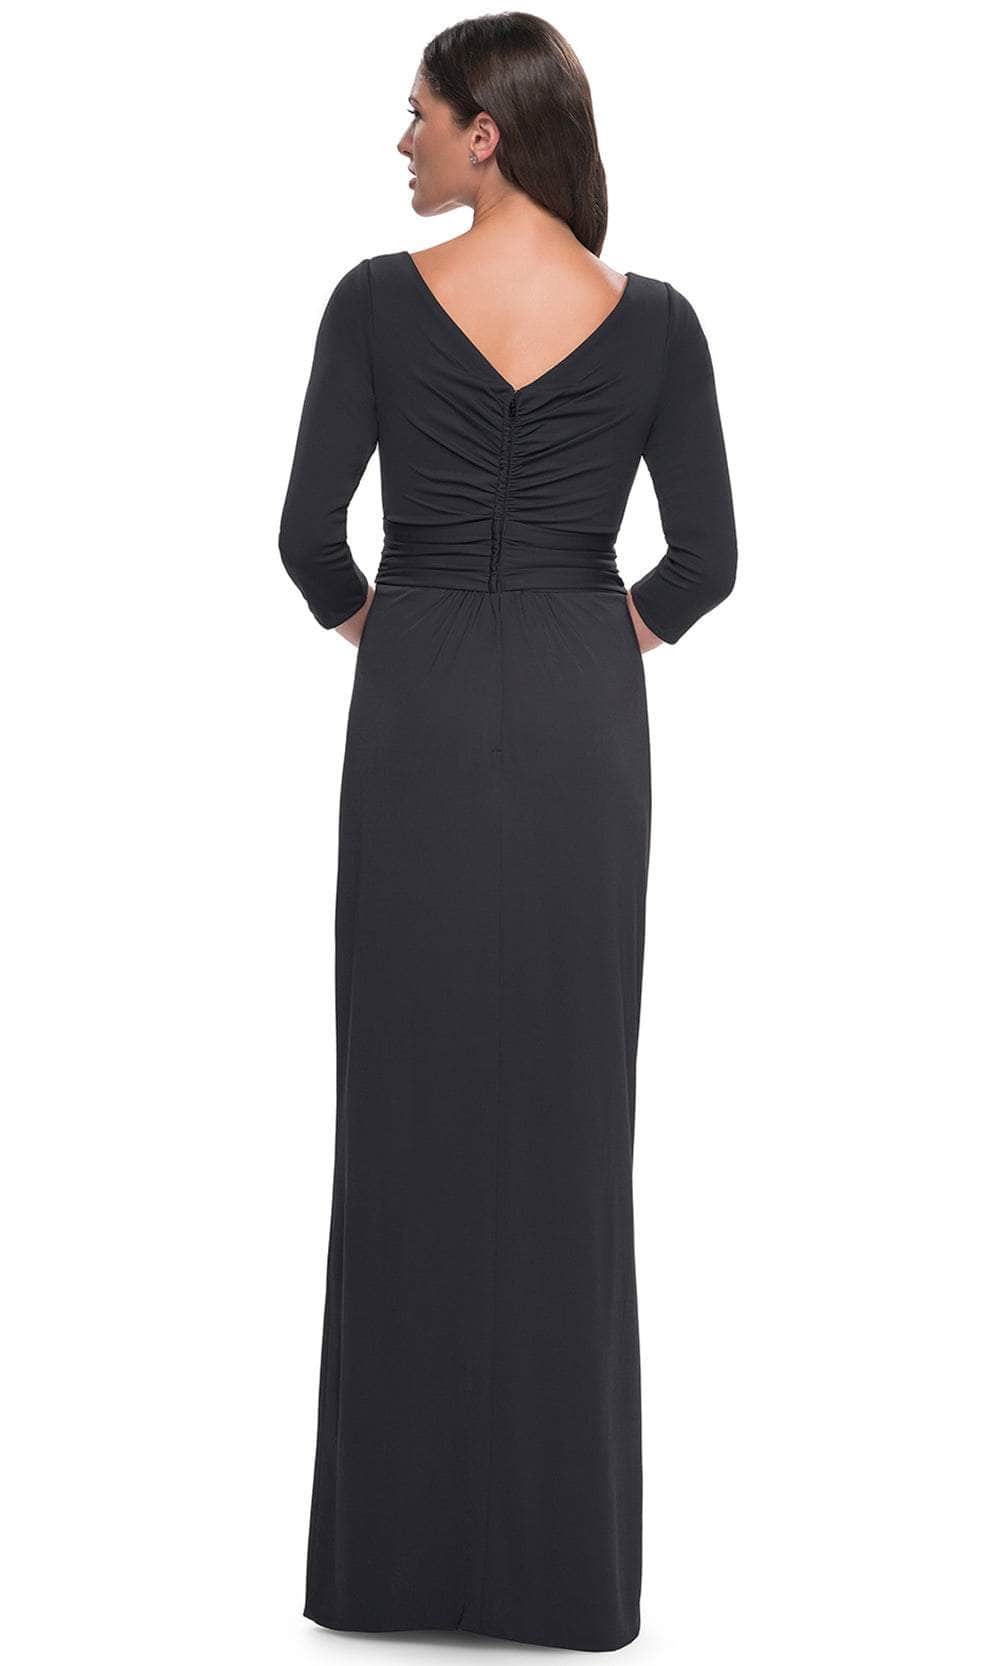 La Femme 31014 - Ruched Waist Evening Dress Evening Dresses